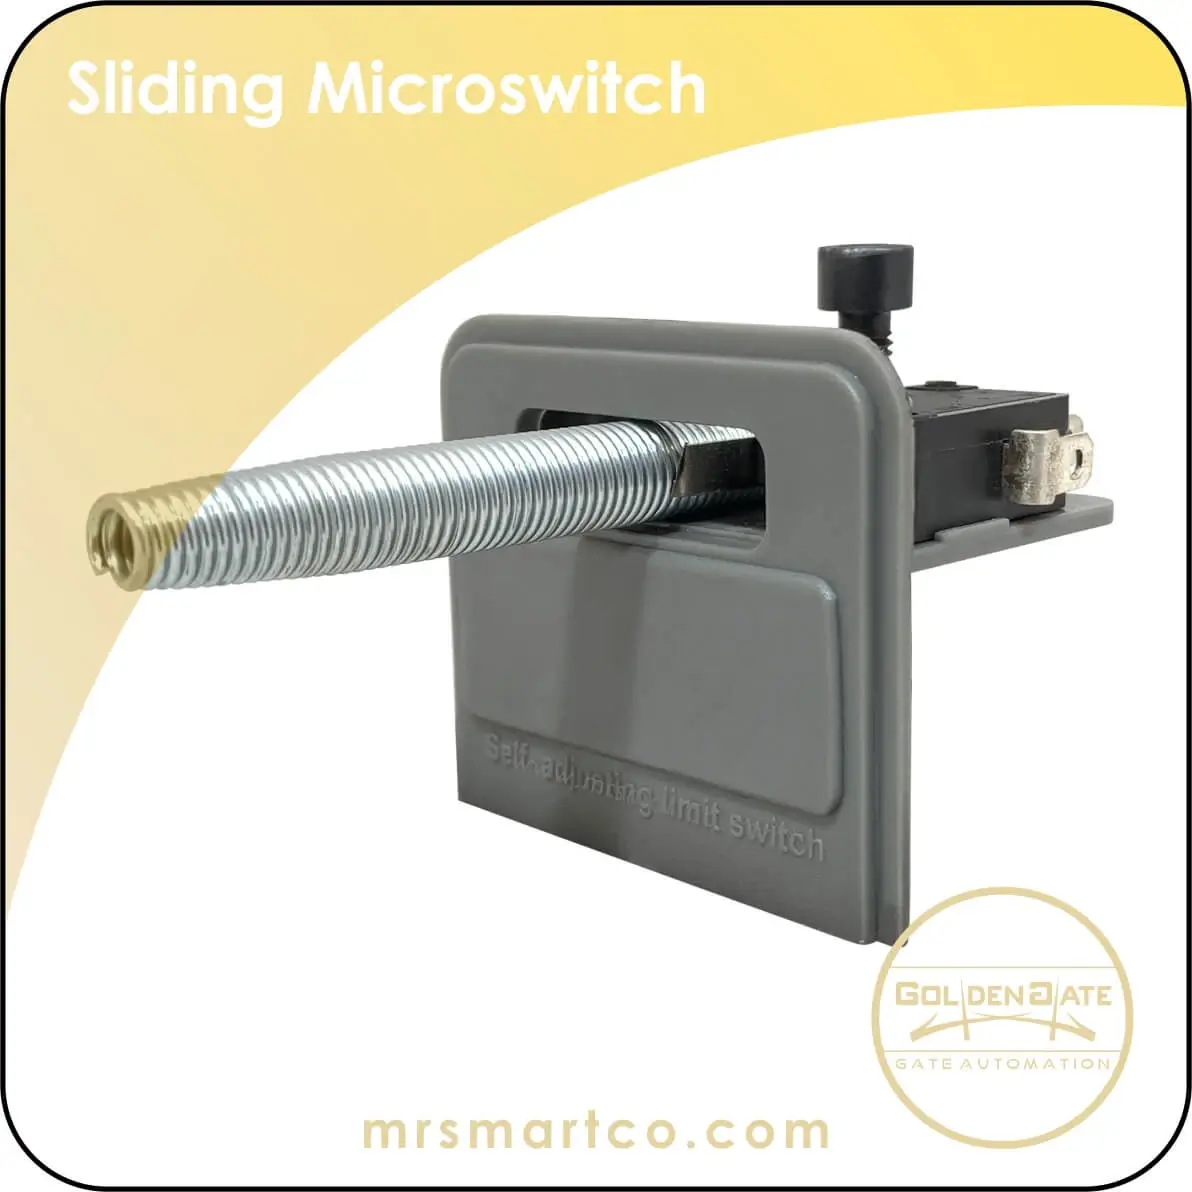 Sliding Microswitch